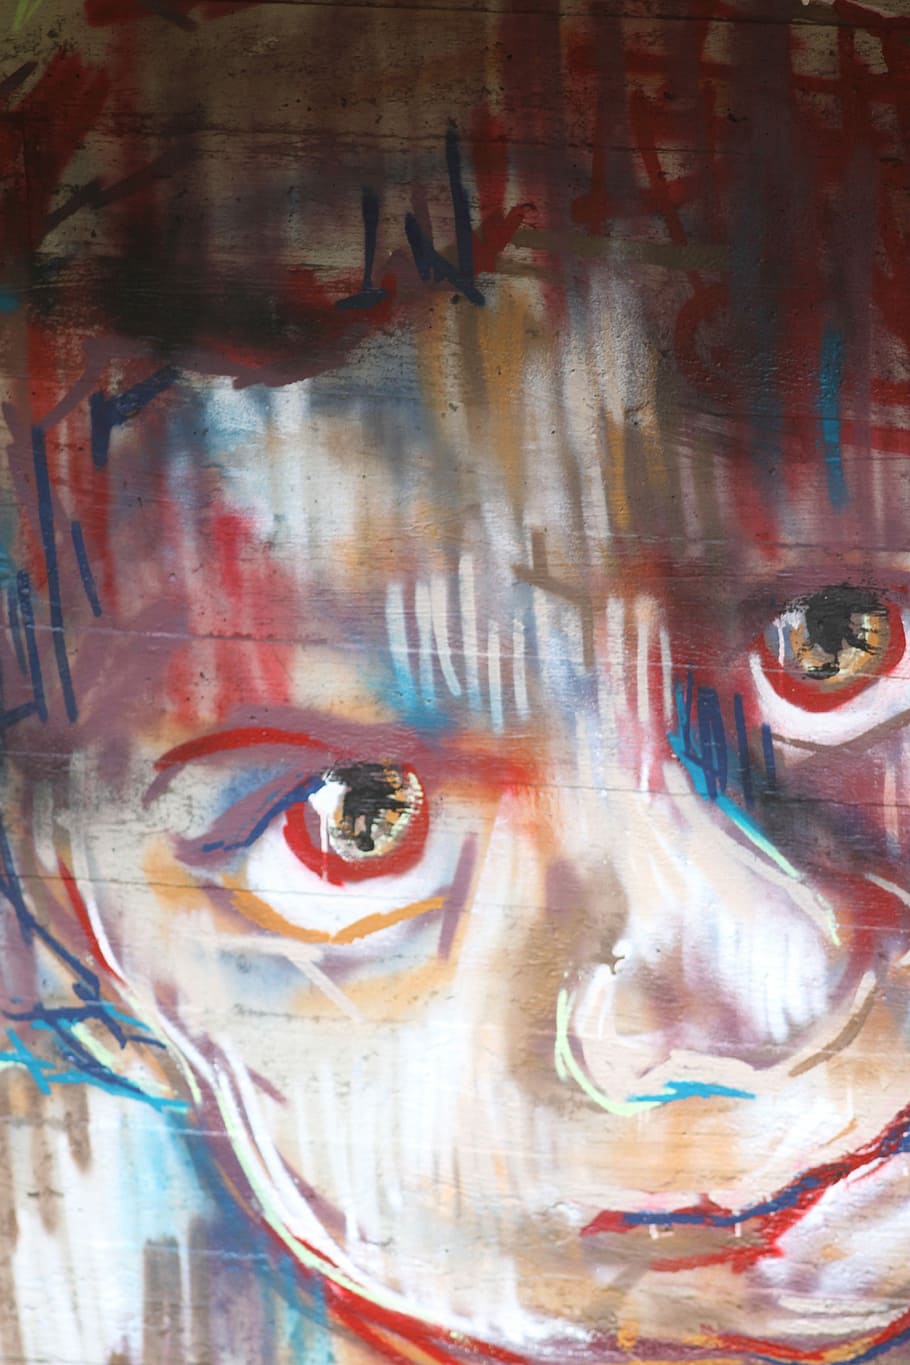 Graffiti, Painting, Art, Wall, a child's face, human face, close-up